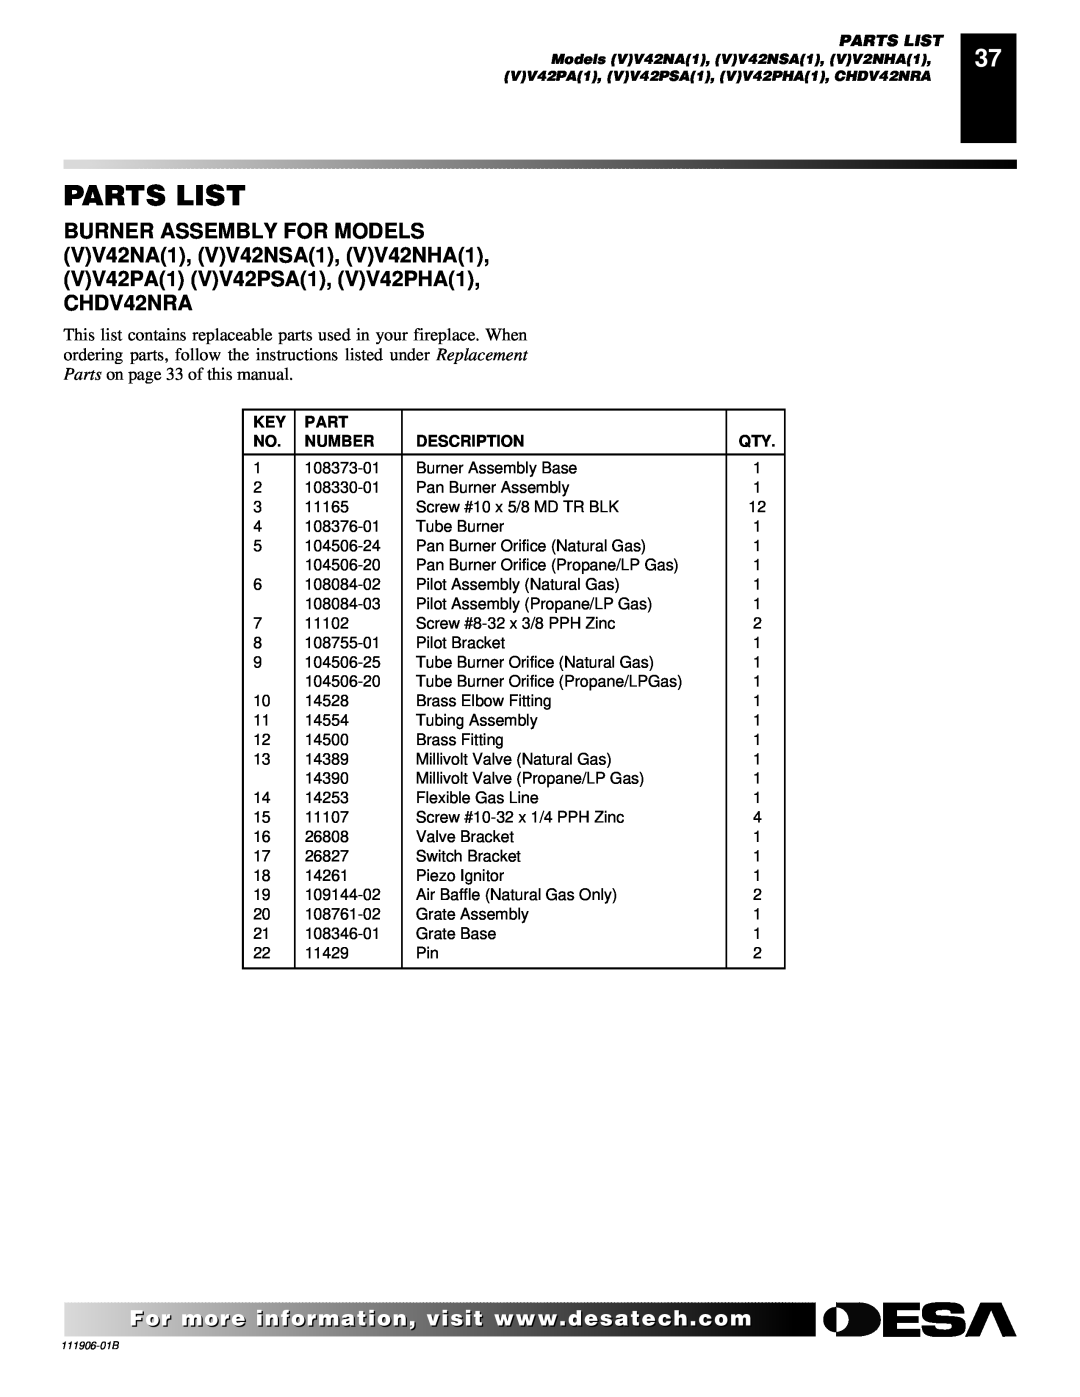 Desa CHDV42NRA, (V)V42PA(1) installation manual Parts List, Number, Description 